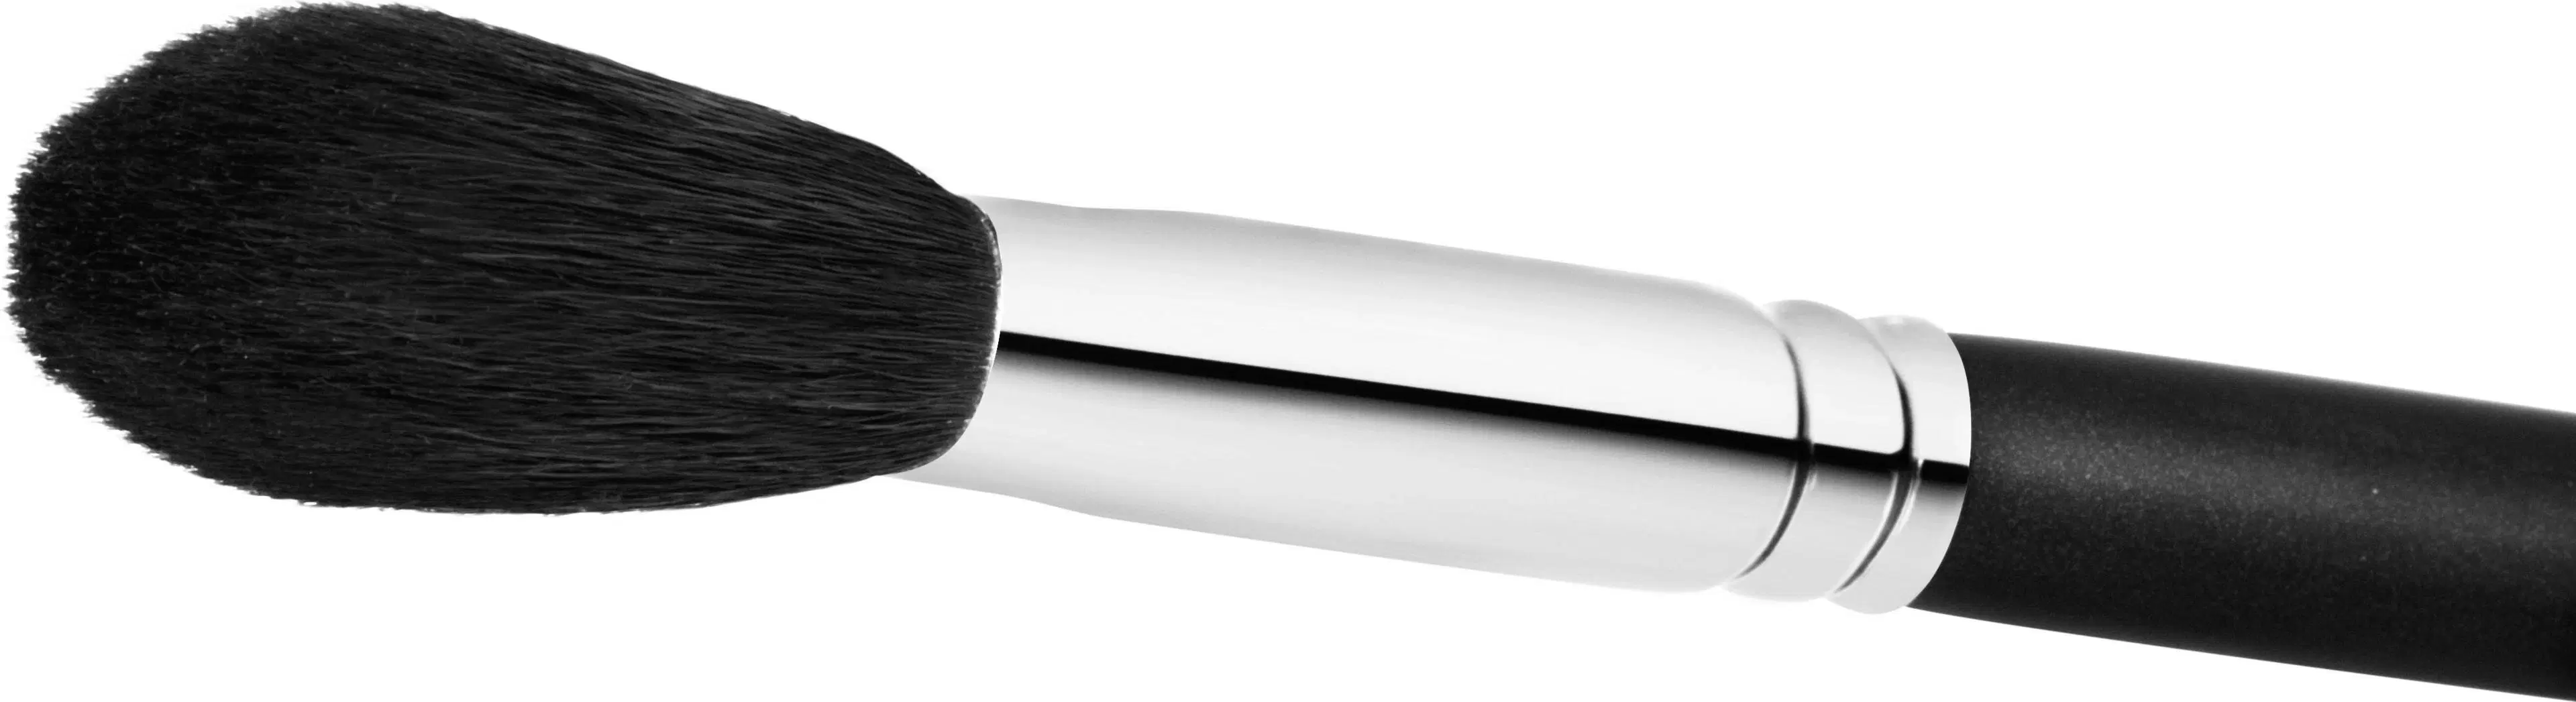 MAC Powder/Blush Brush 129s sivellin